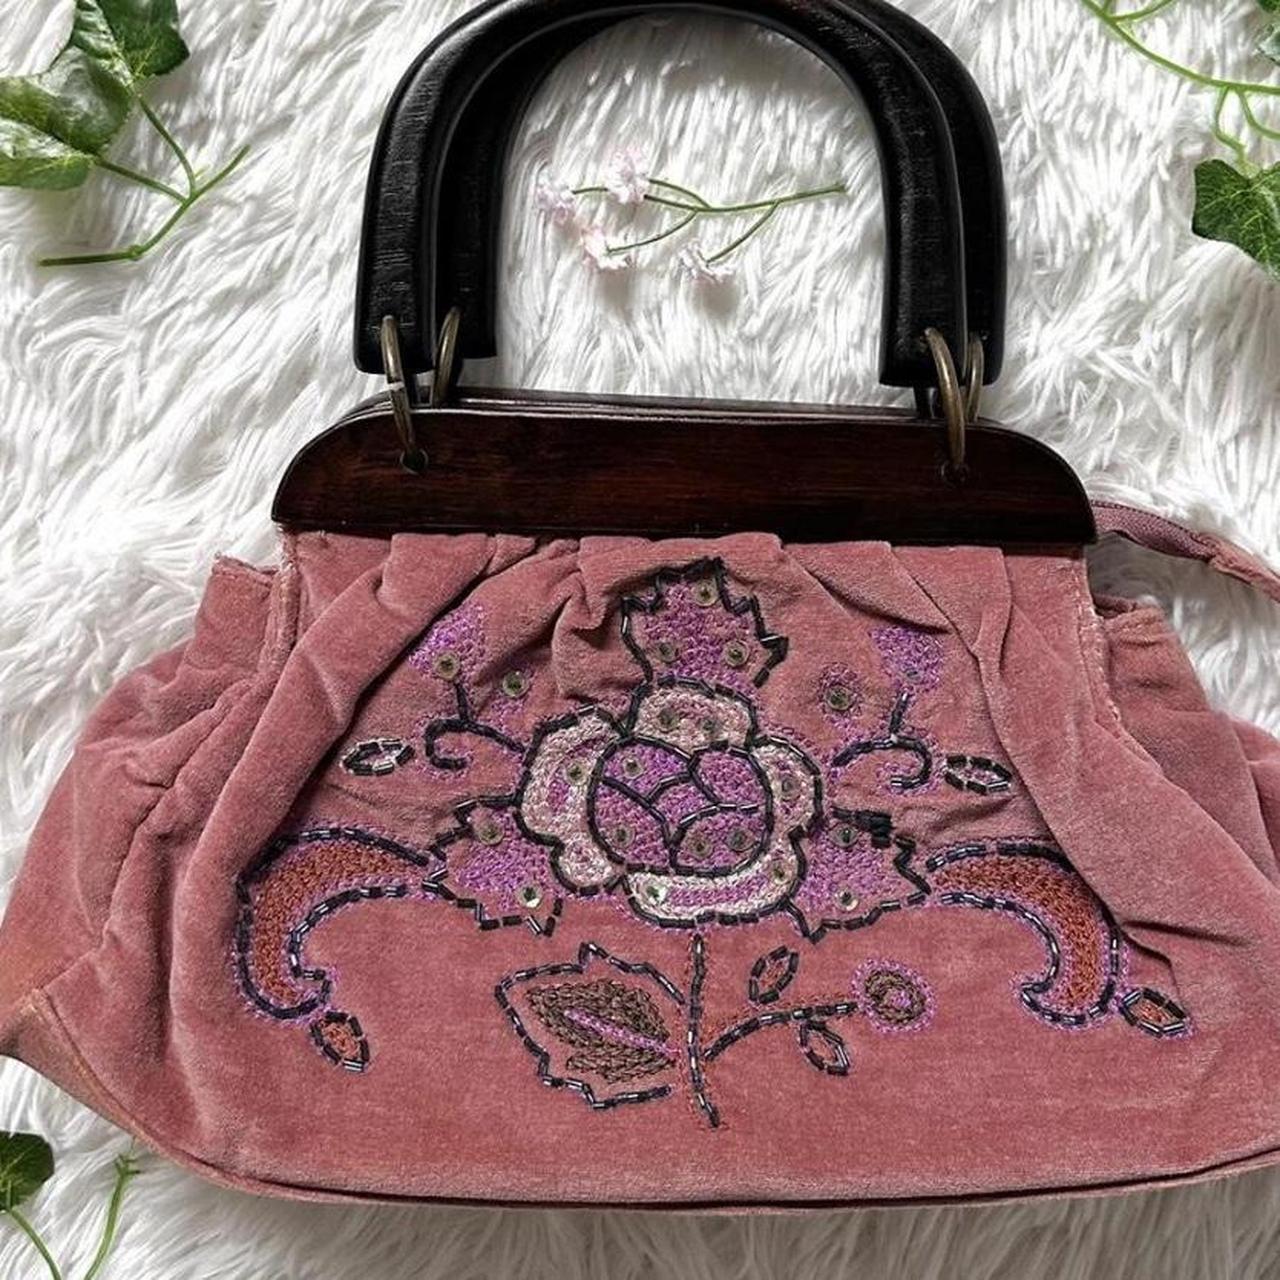 Famous Avon Handbags: 9 Classic Designs with a Modern Twist